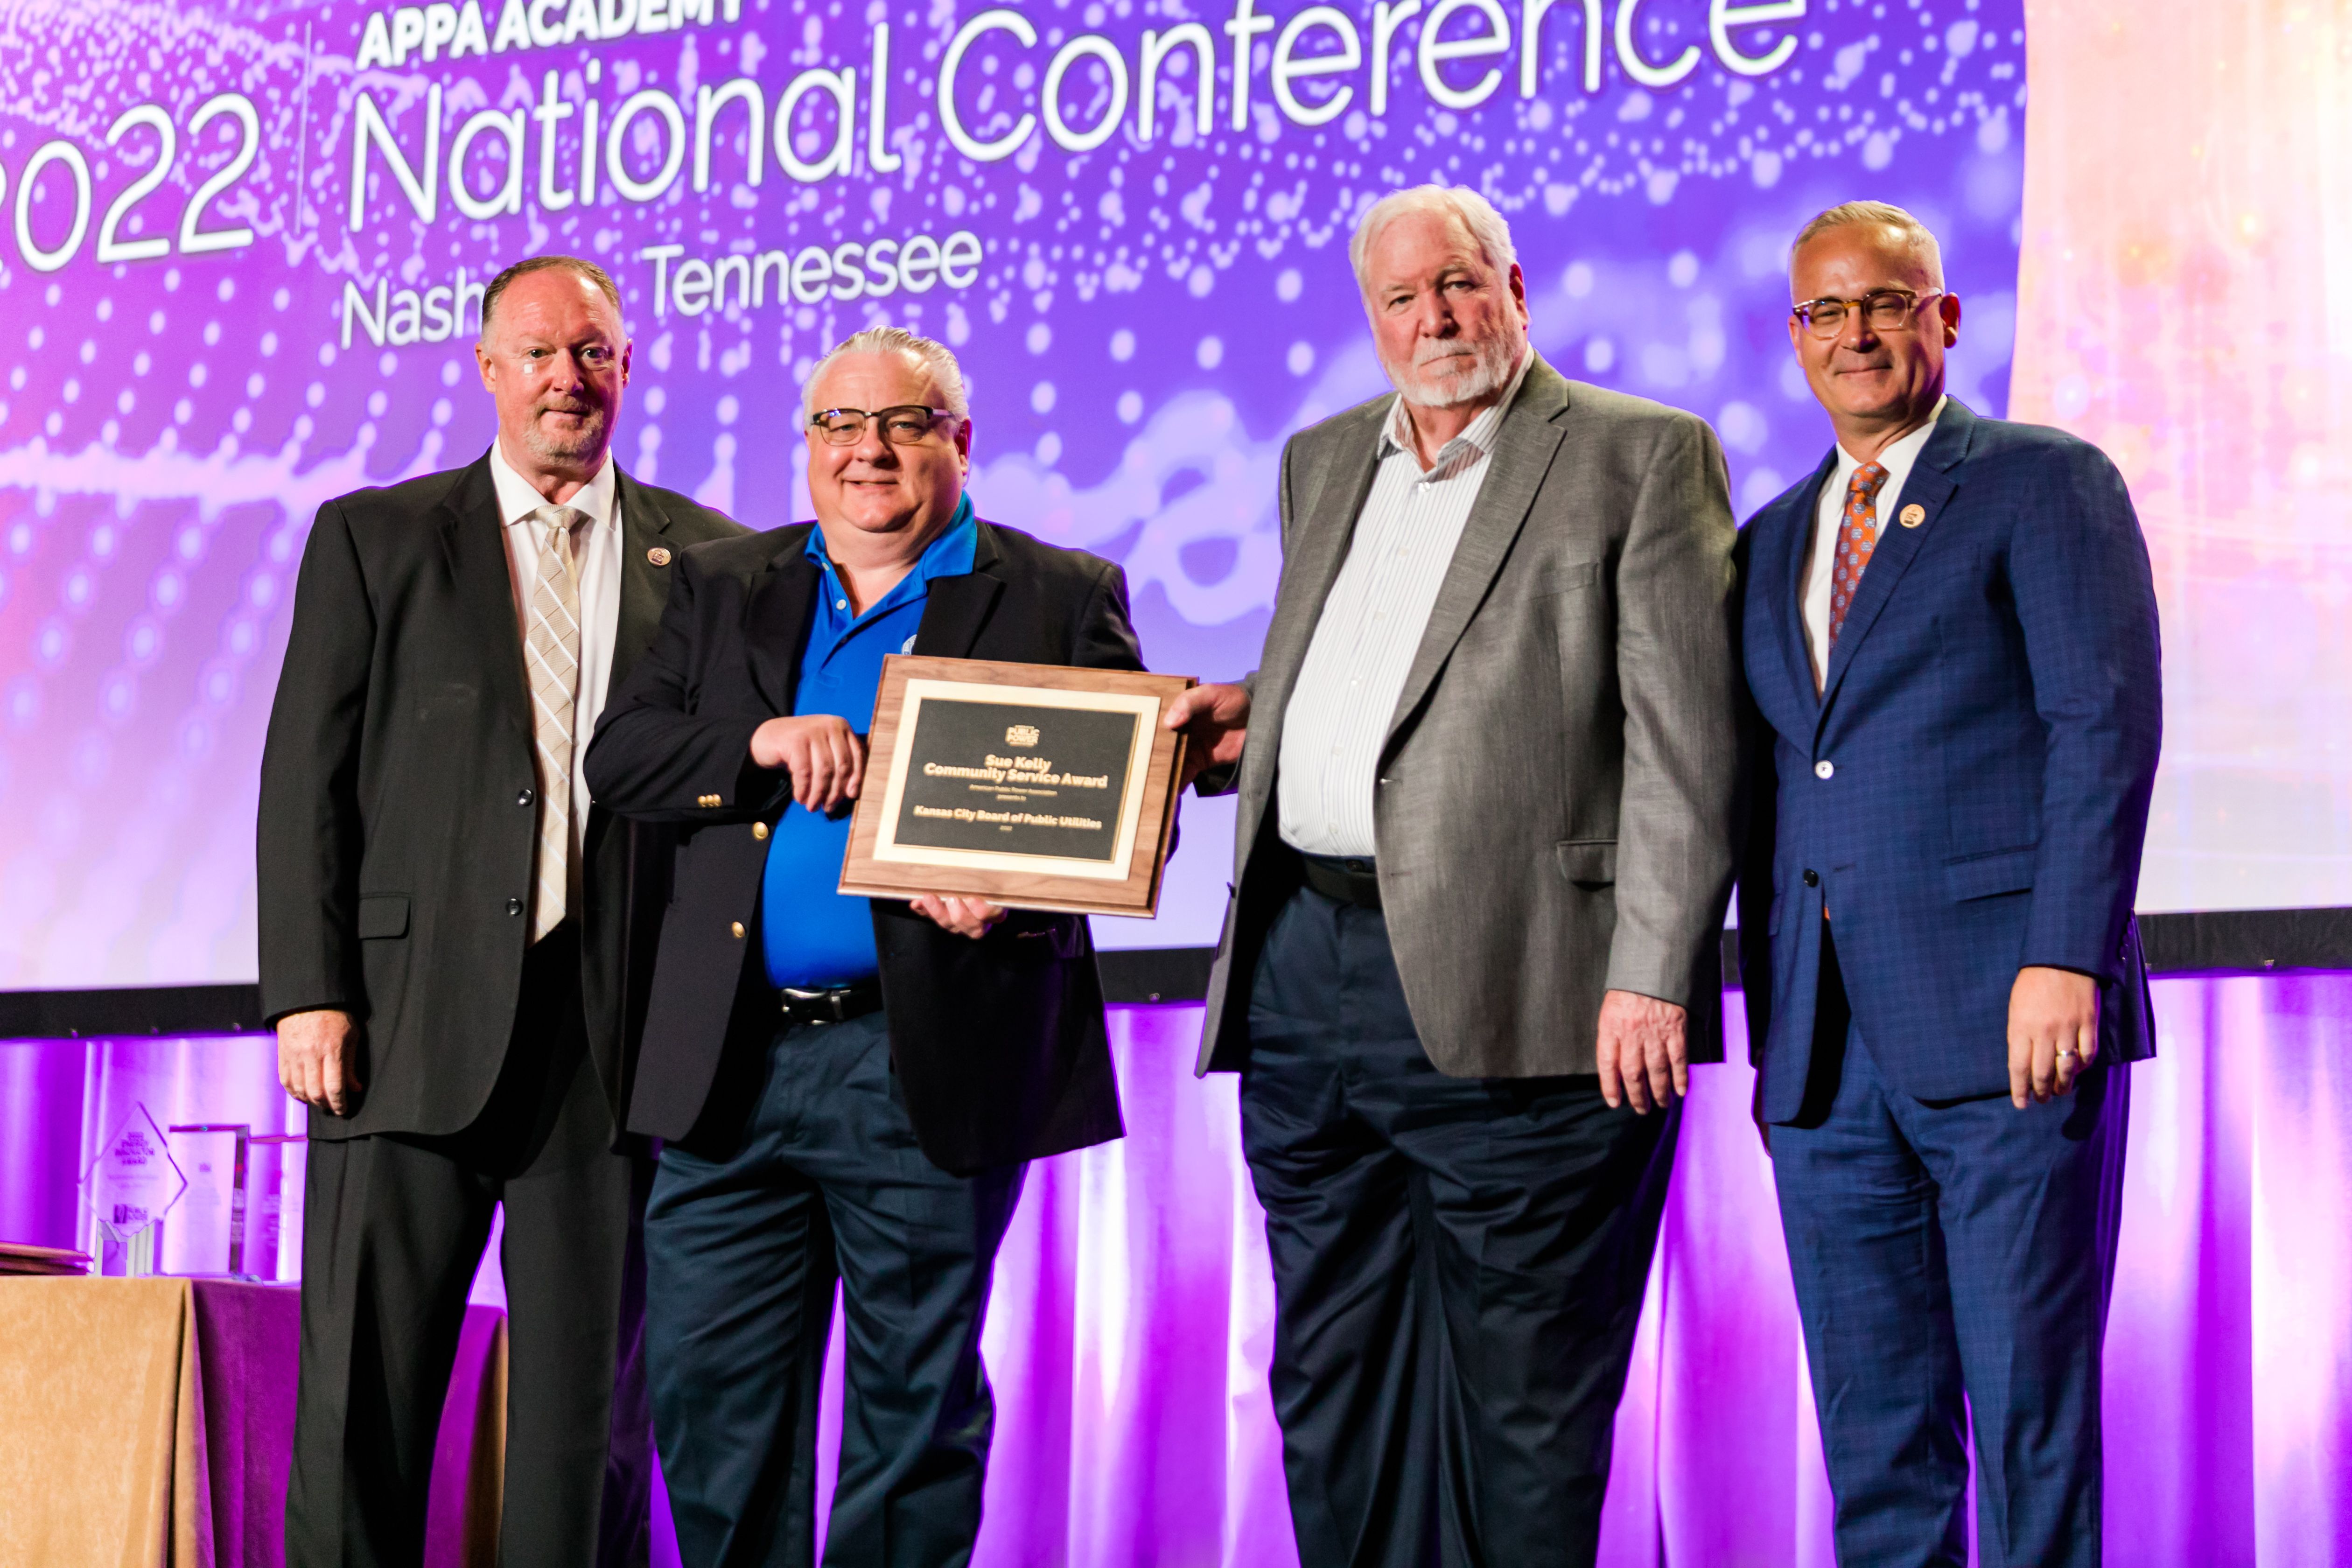 BPU Receives National Award for Community Service